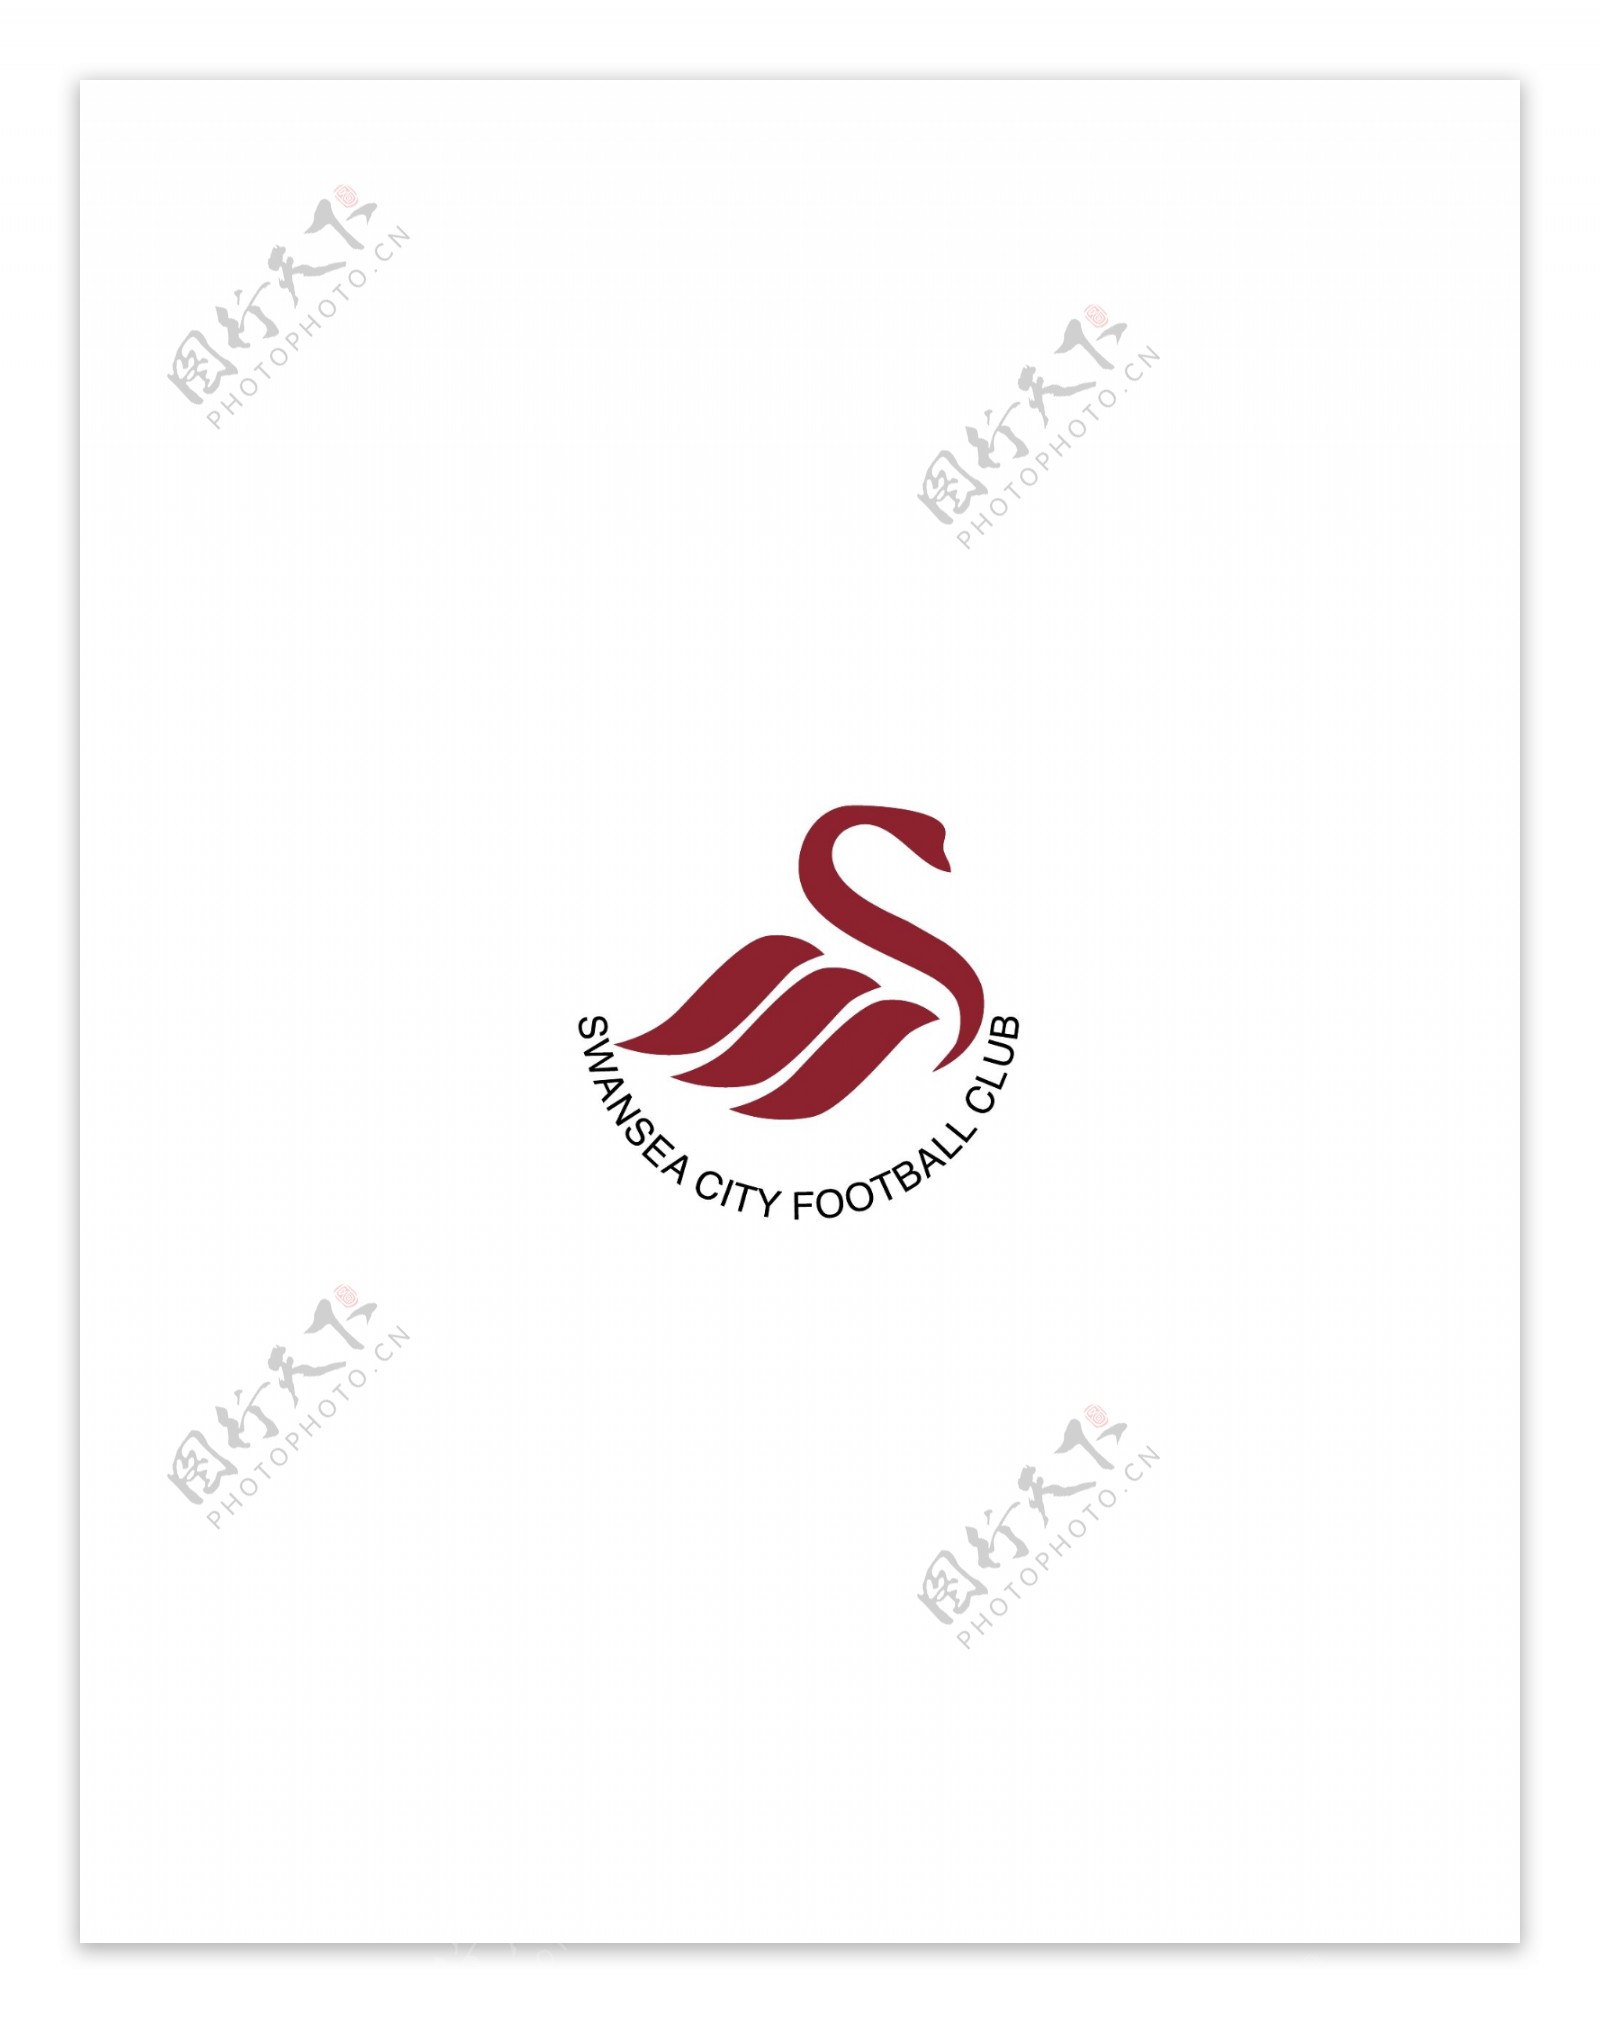 SwanseaCityFClogo设计欣赏职业足球队标志SwanseaCityFC下载标志设计欣赏